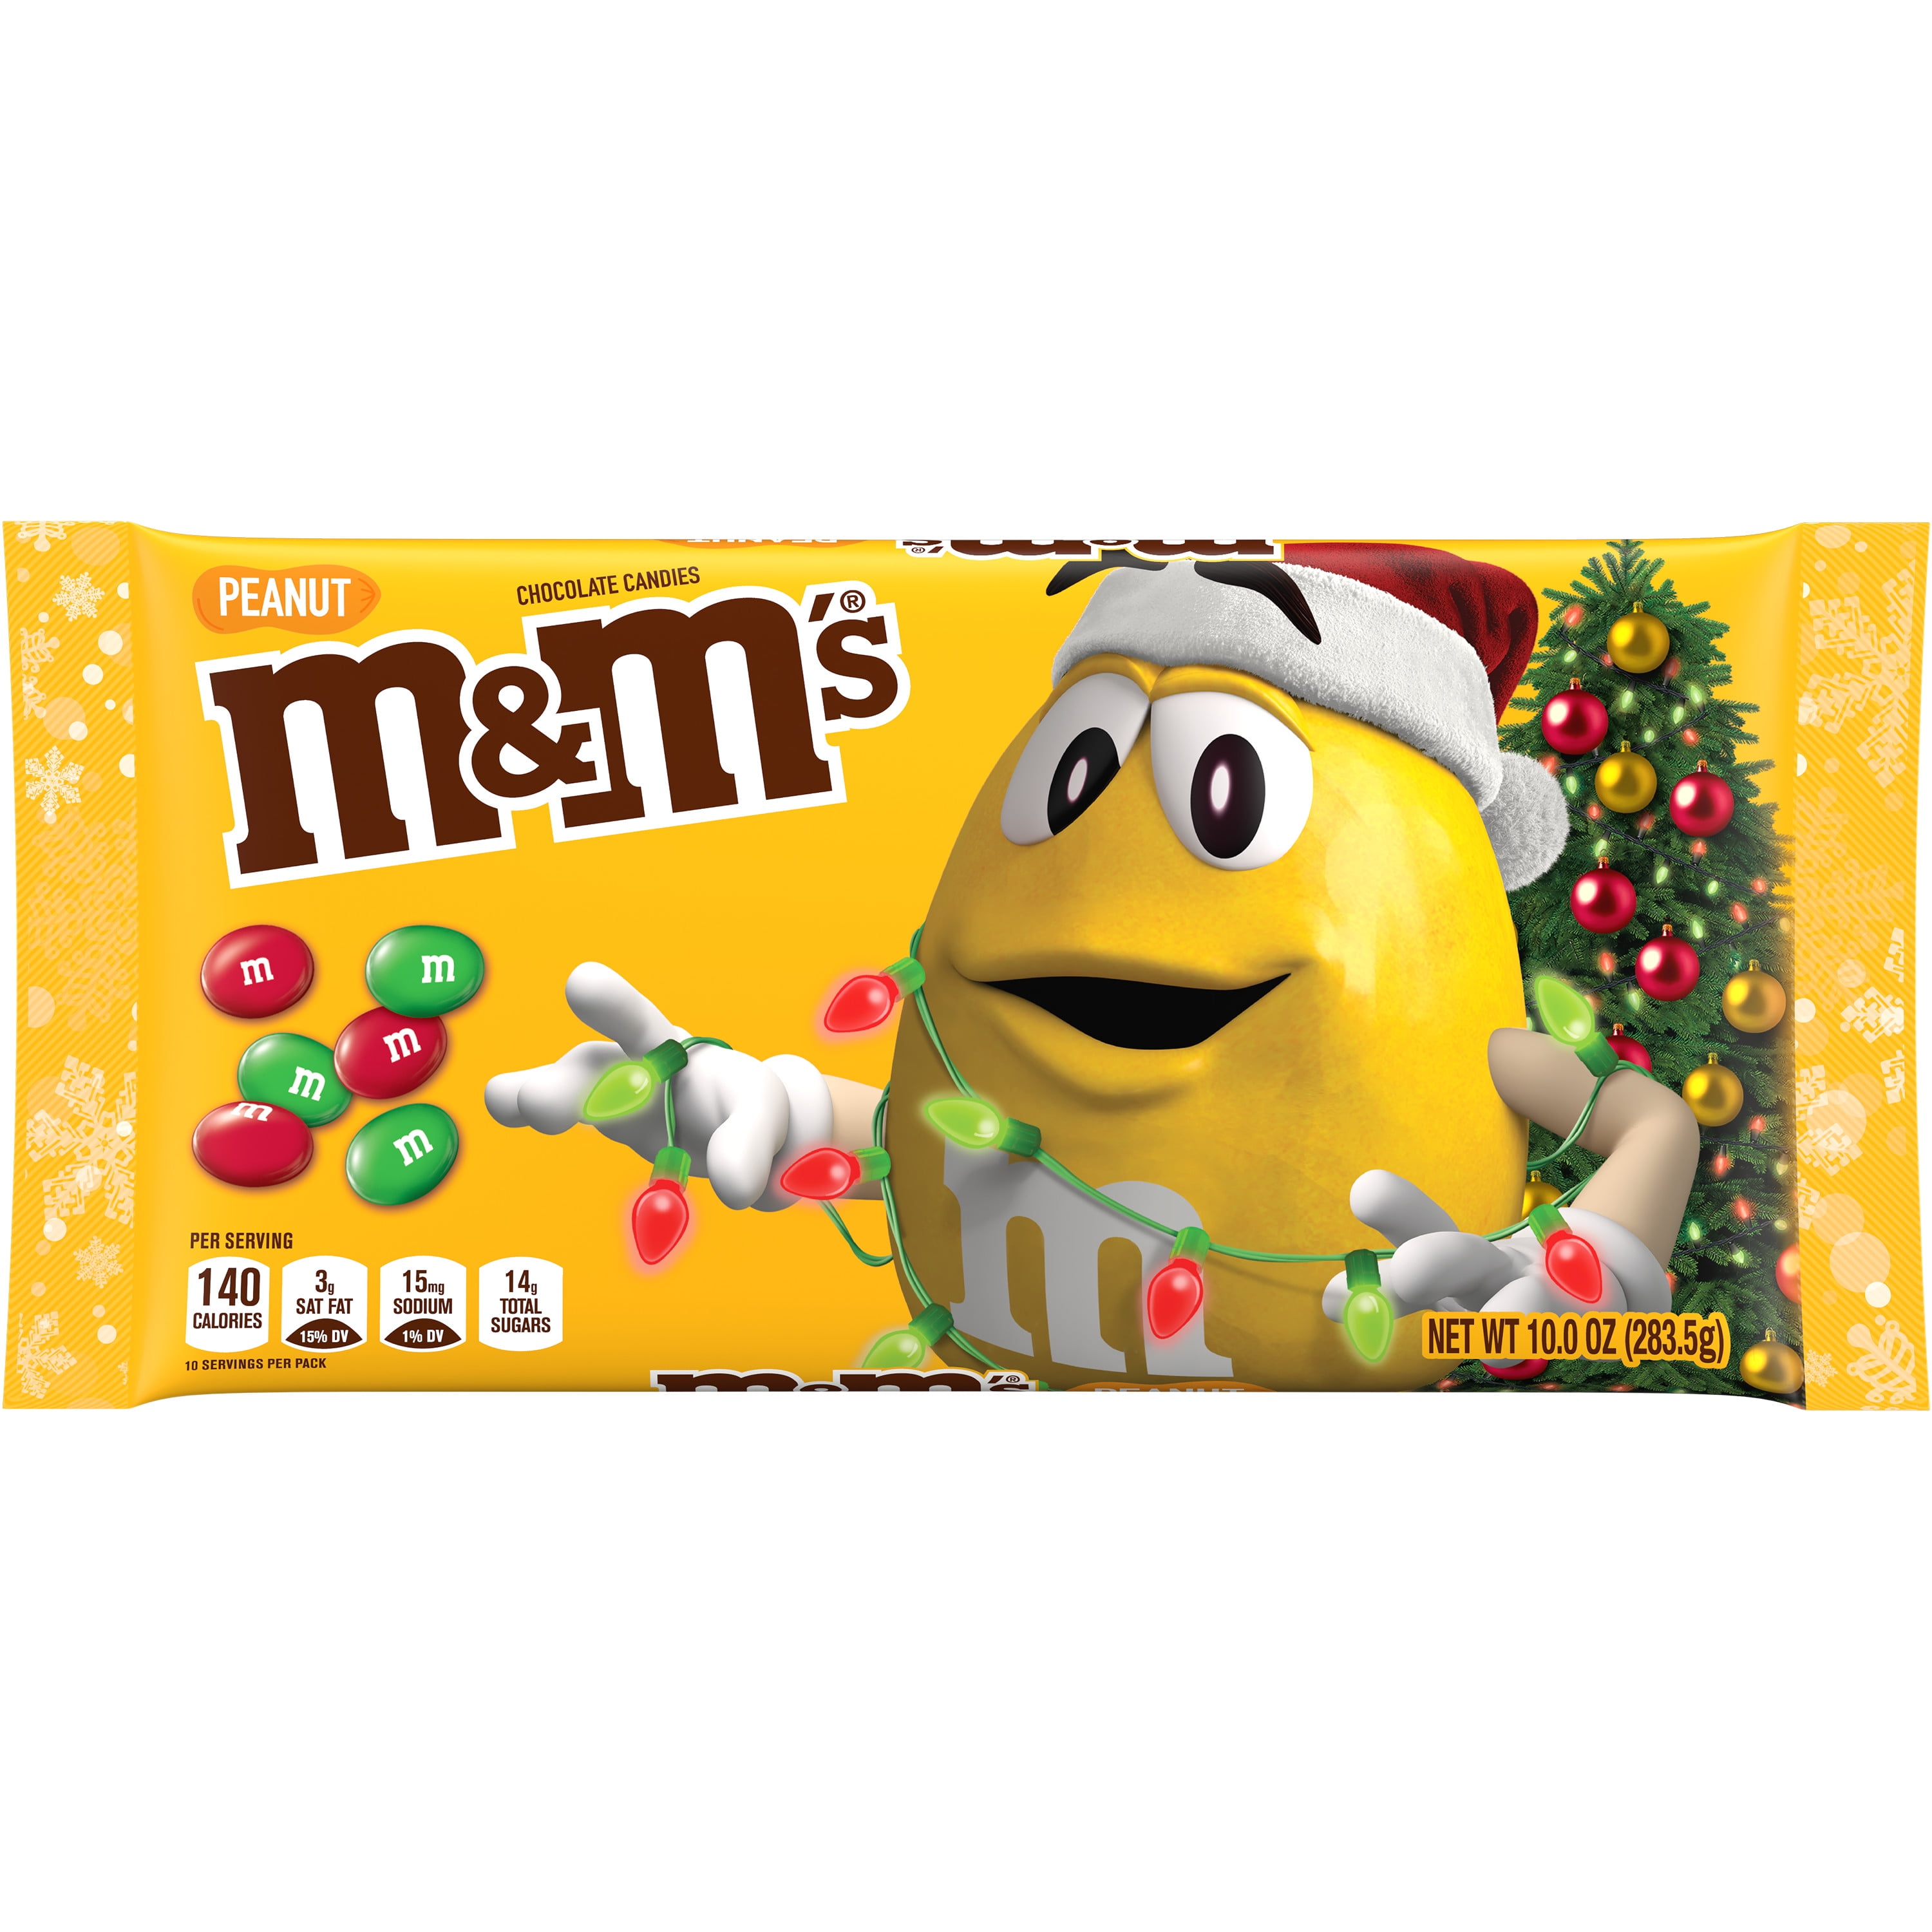 Christmas m&ms – Half Nuts